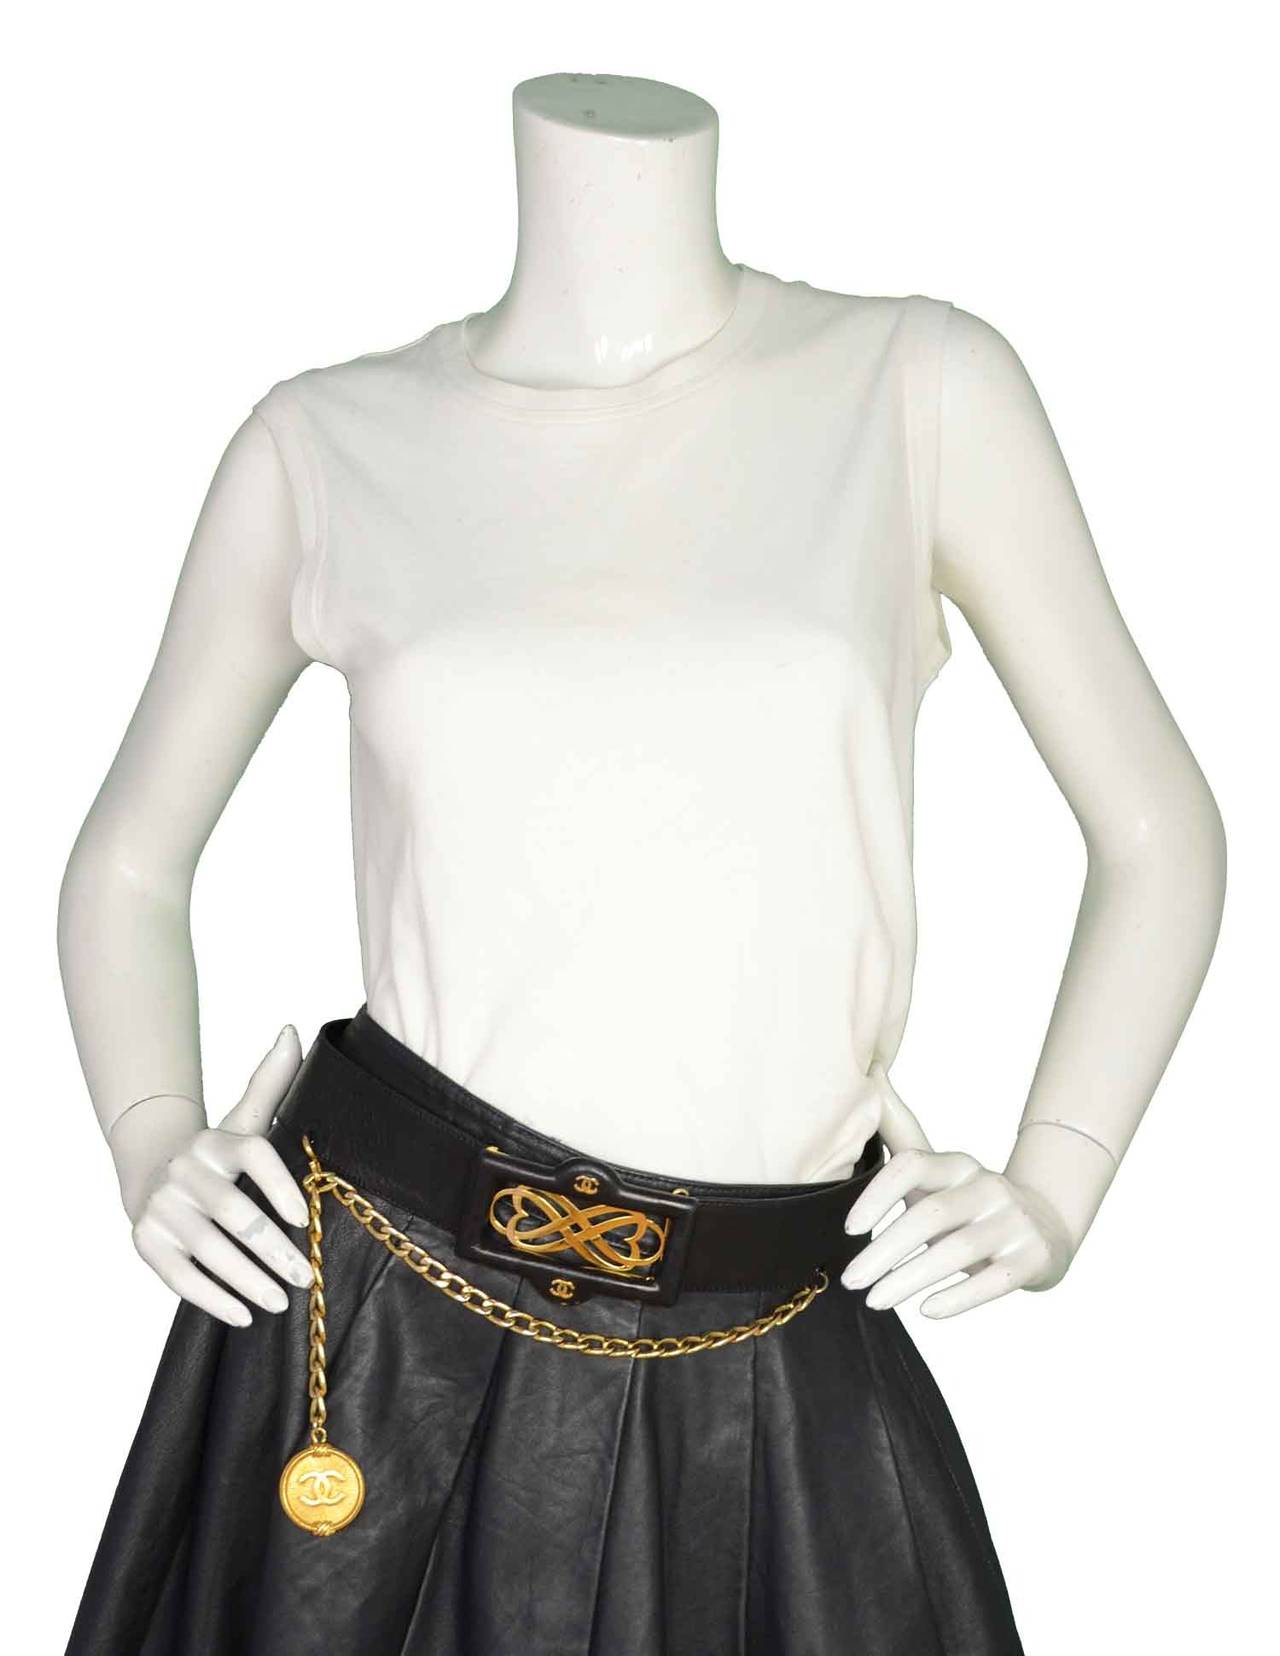 CHANEL Vintage Black Leather Thick Belt w/ Logo Buckle & Chain Tier sz. 95/38 4